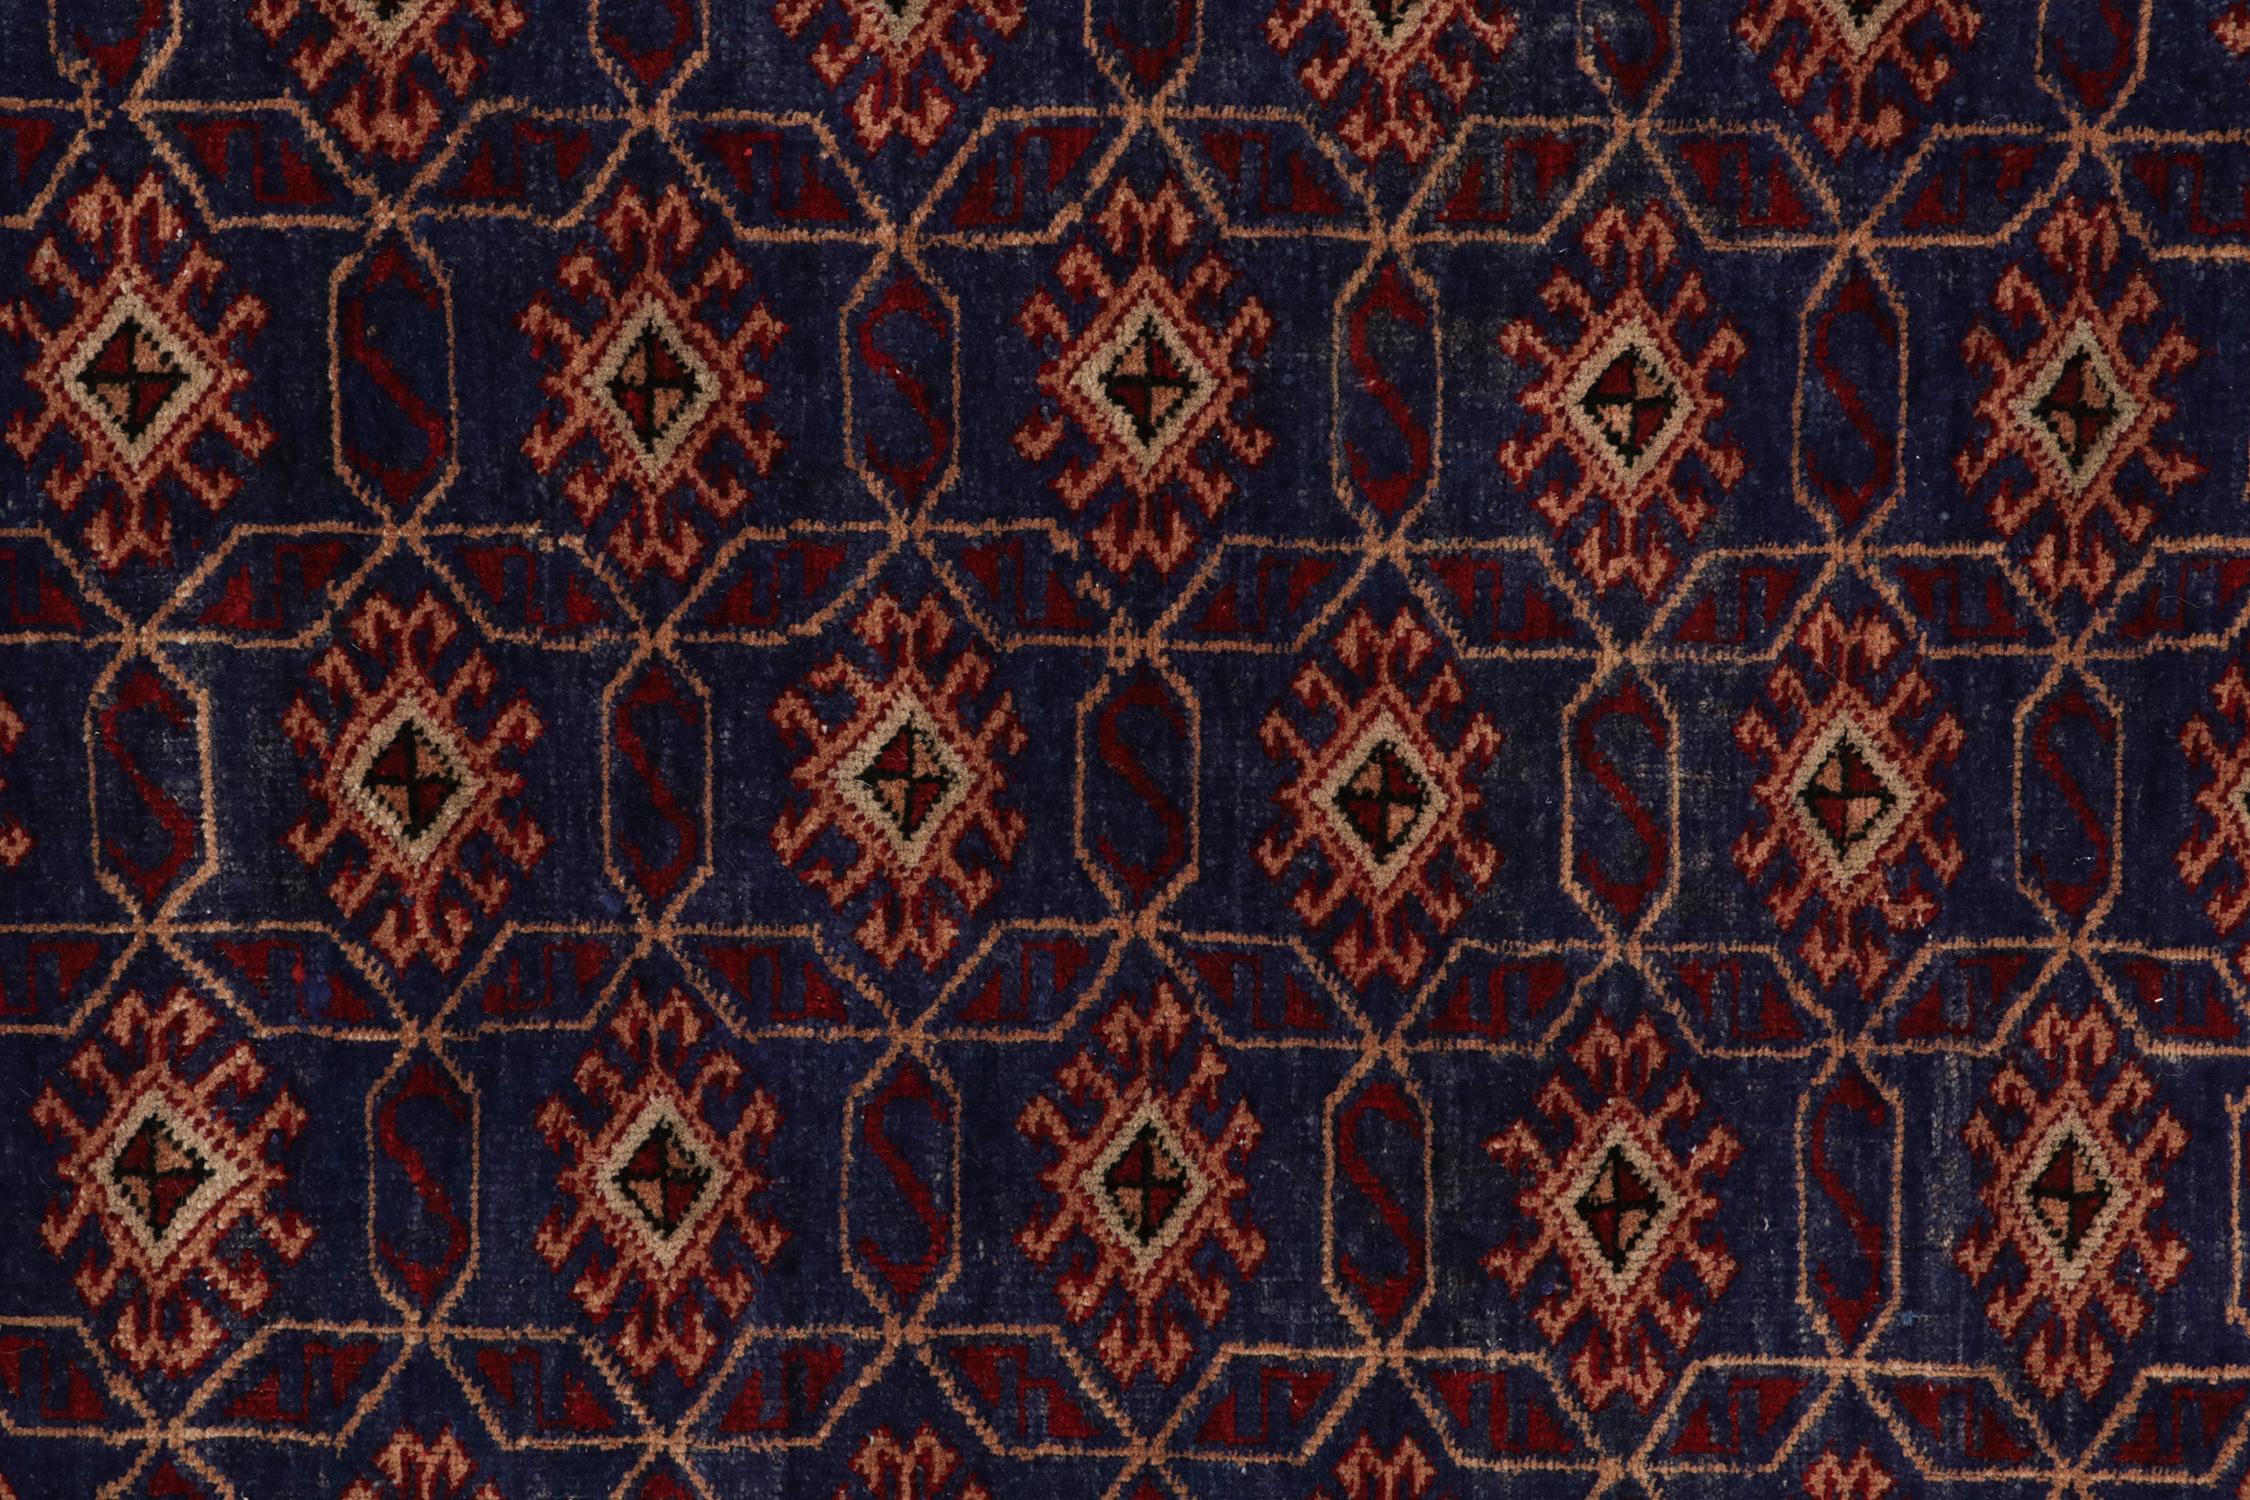 Mid-20th Century Vintage Zeki Müren Rug in Indigo with Red and Beige Pattern, by Rug & Kilim For Sale